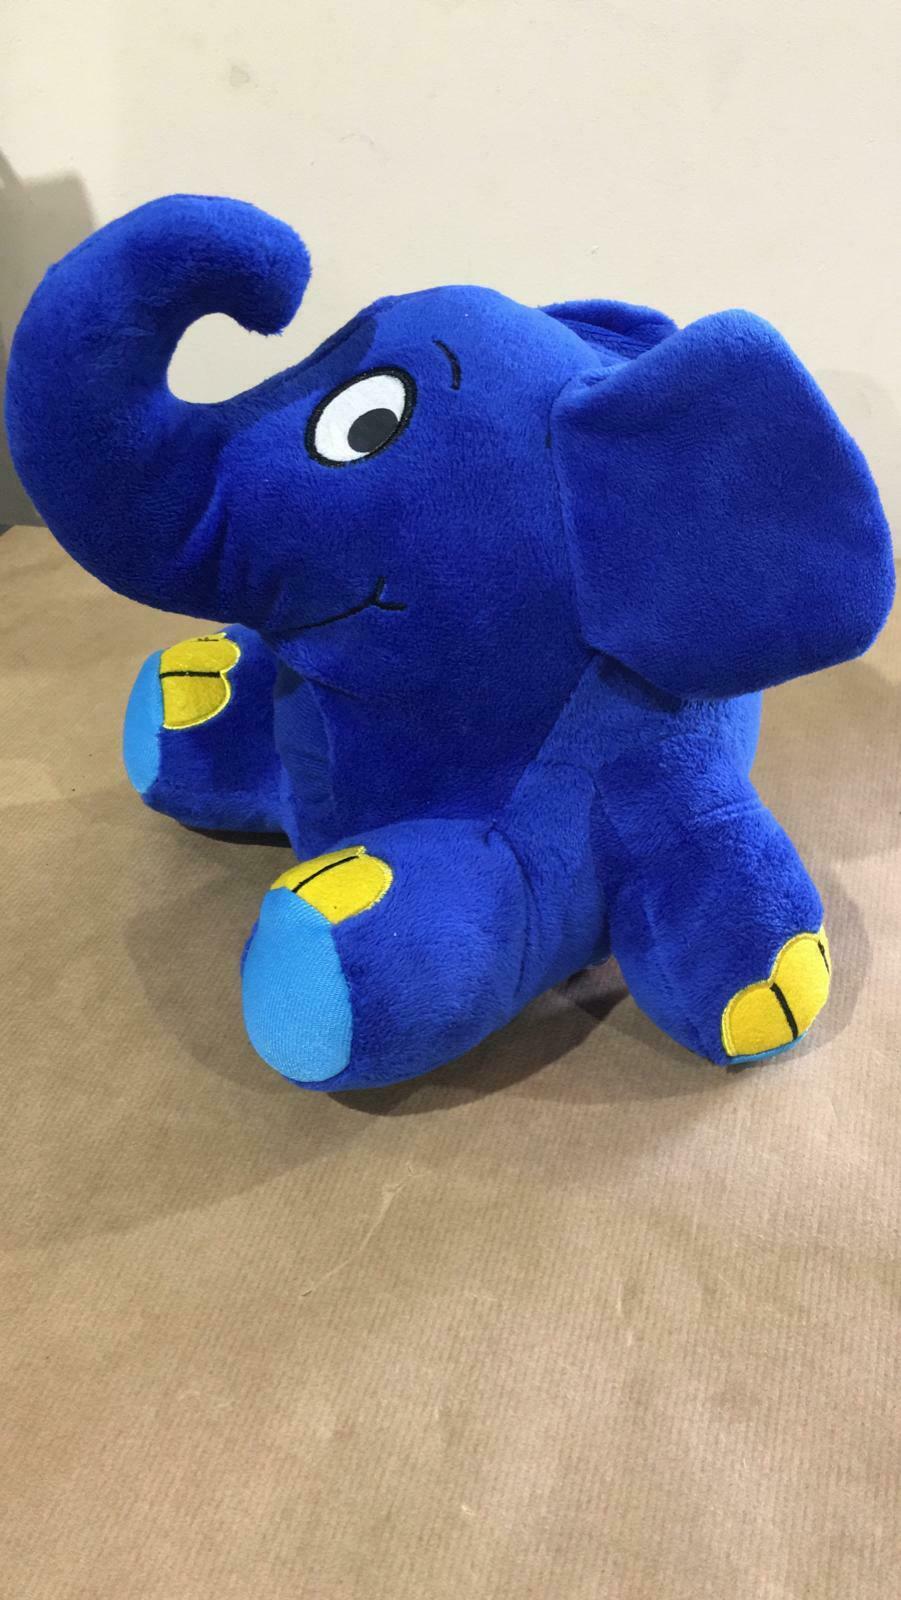 ANSMANN LED night light elephant sleep aid washable cuddly toy children 8770